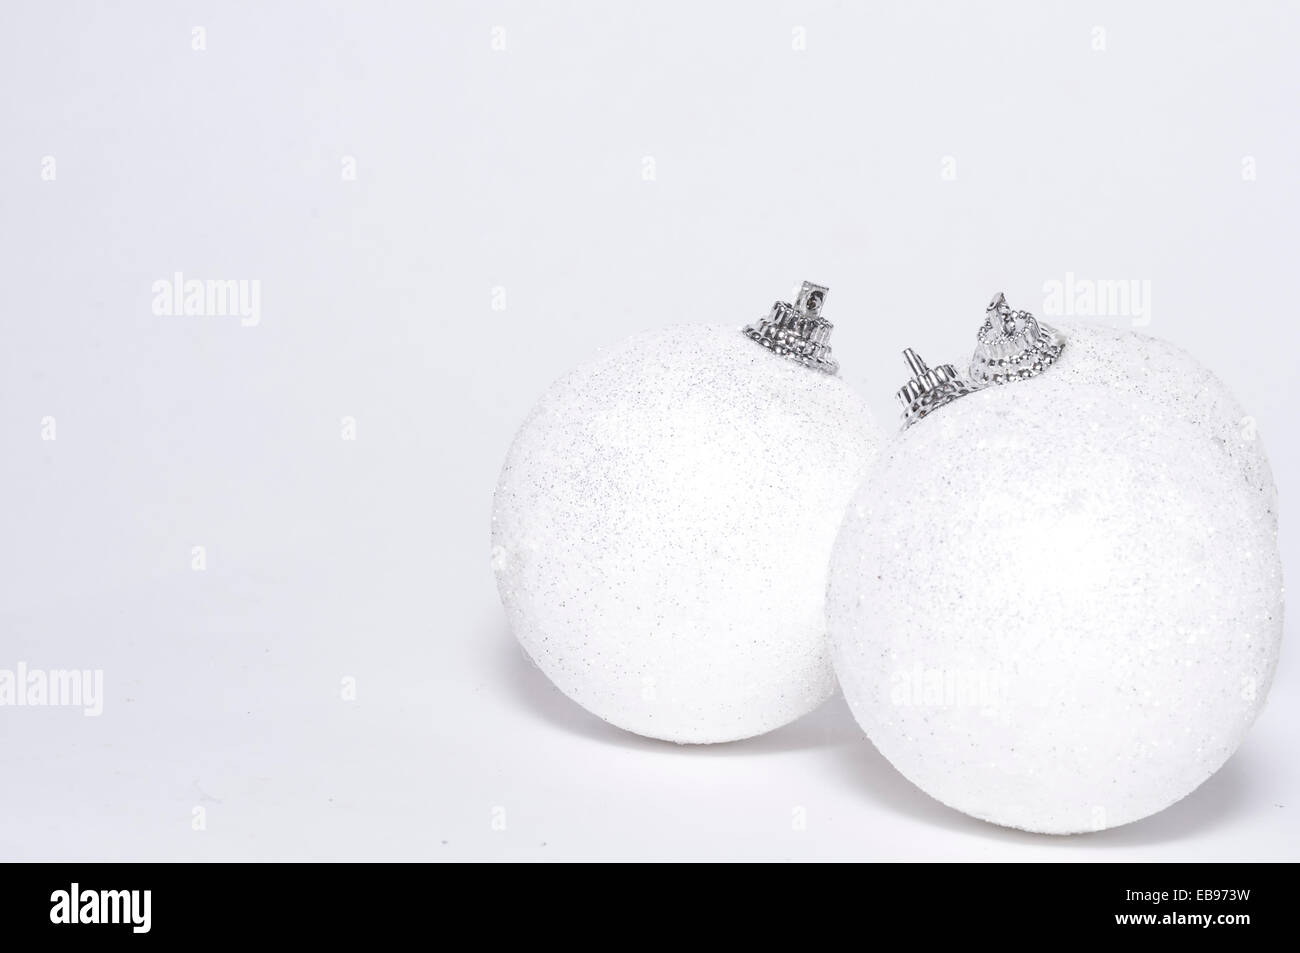 white Christmas backdrop with three balls Stock Photo